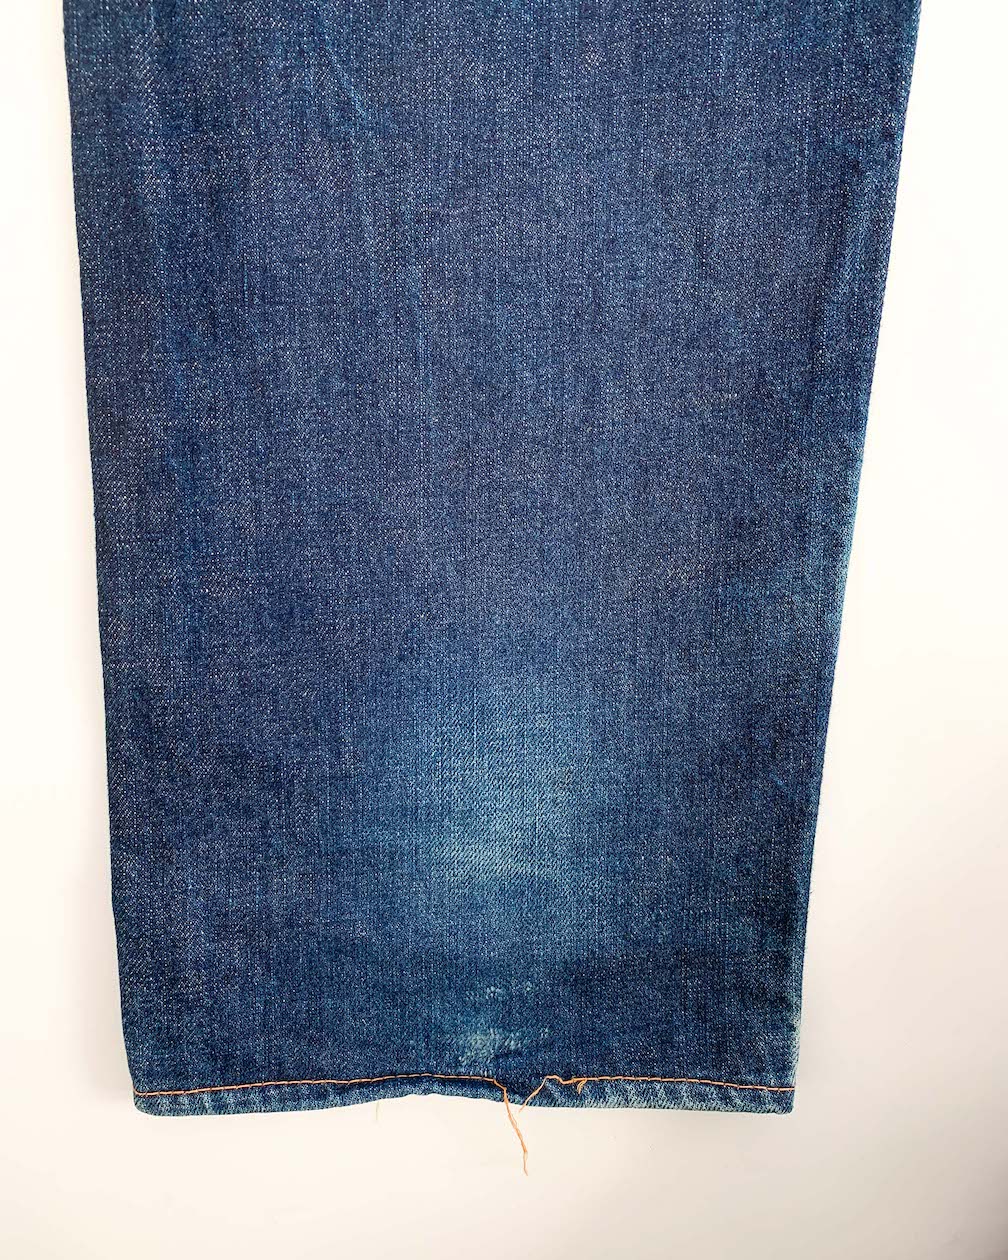 Evisu Red Kanji Jeans (W31) – Source of Heat